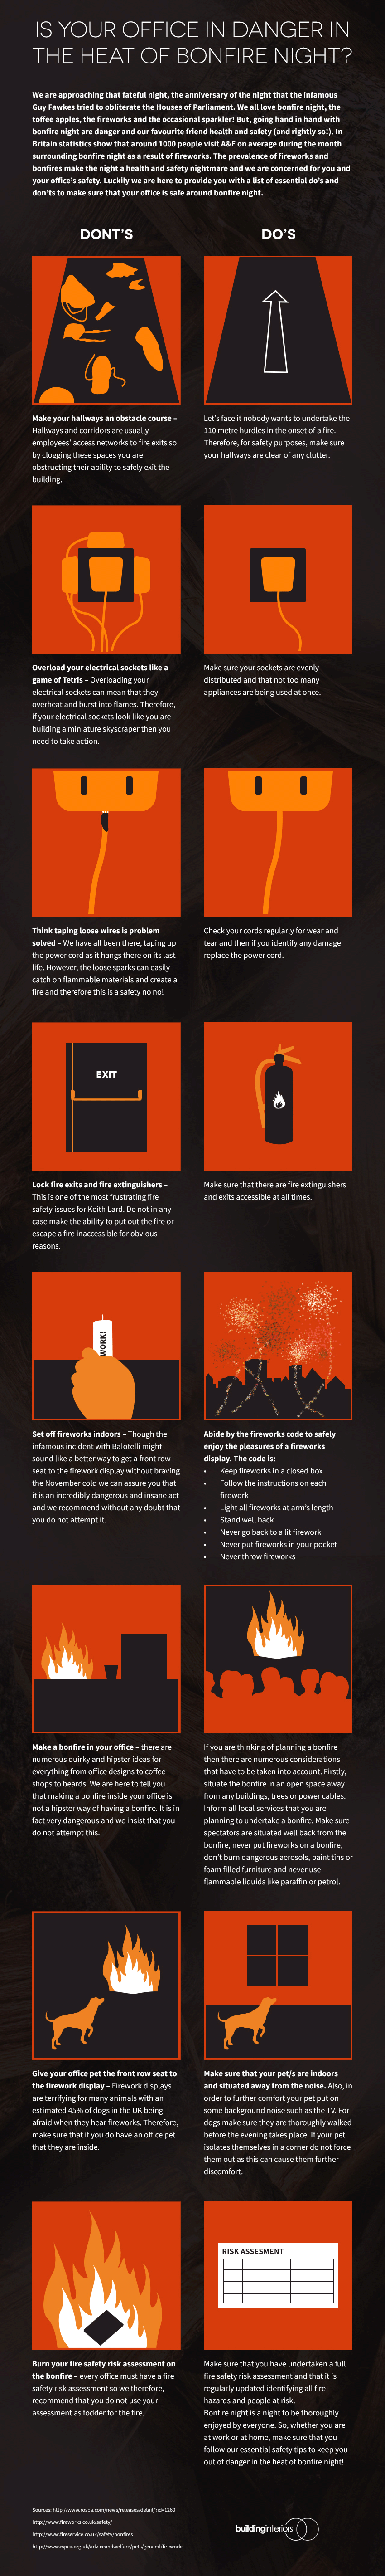 bonfire-night-infographic